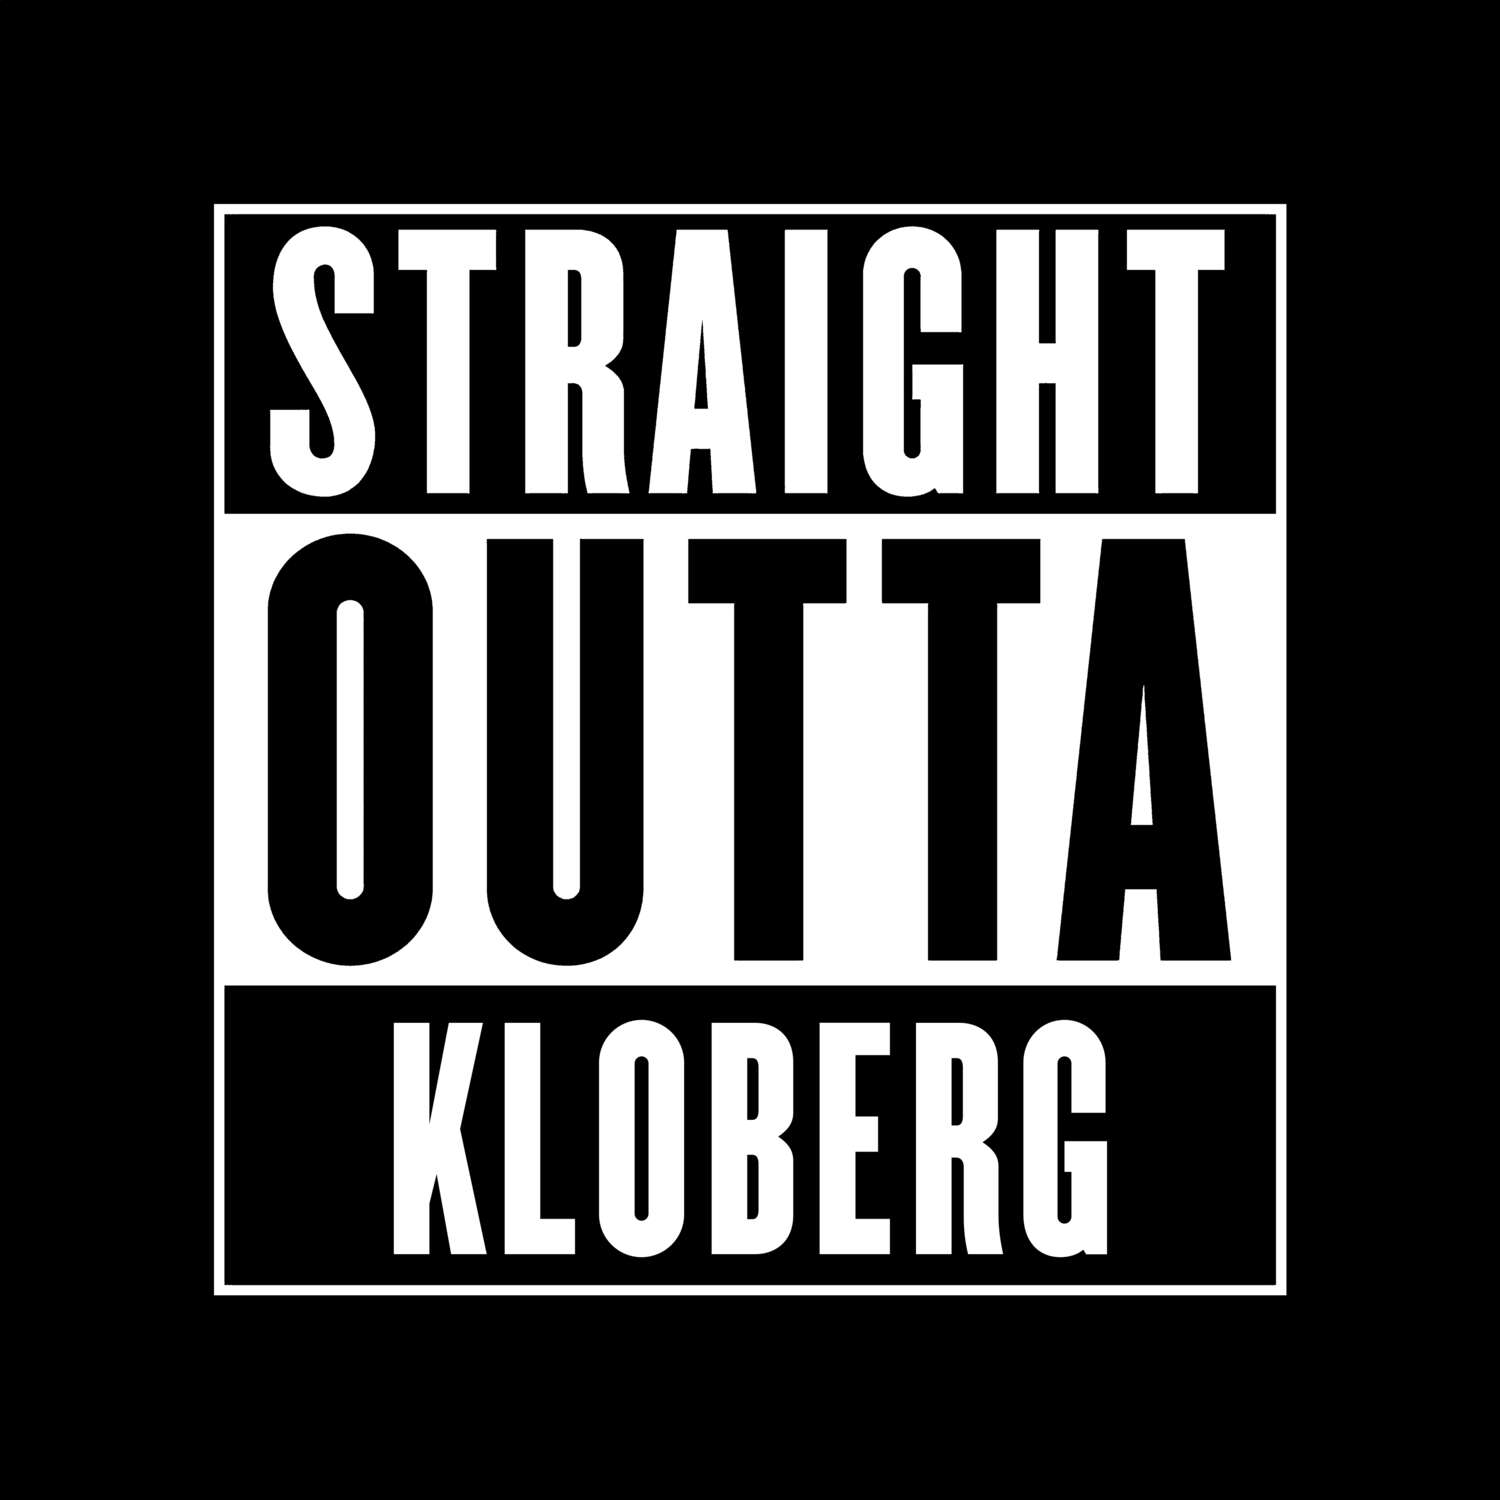 Kloberg T-Shirt »Straight Outta«